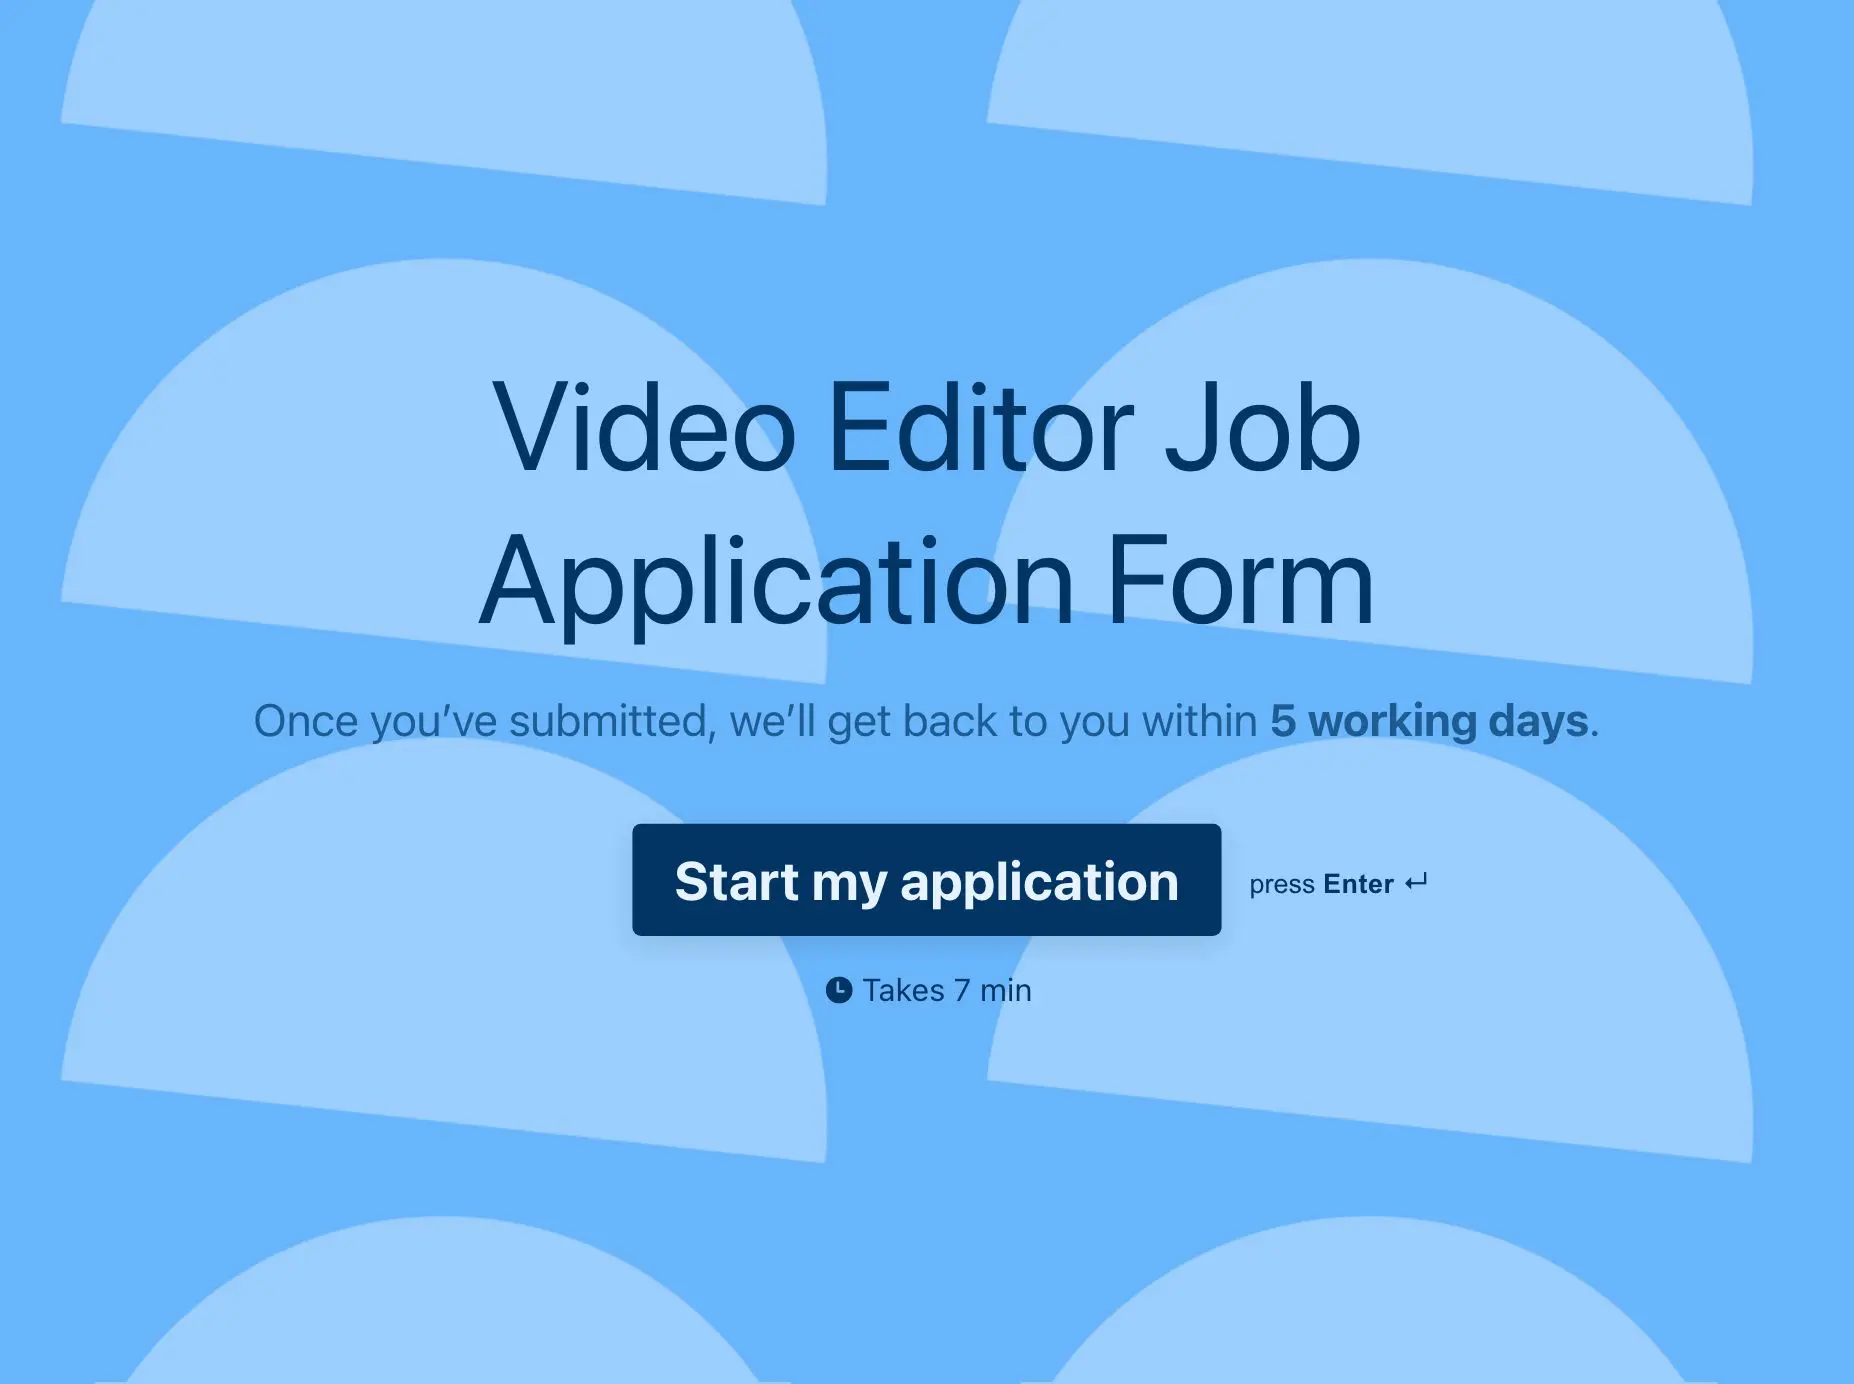 Video Editor Job Application Form Template Hero